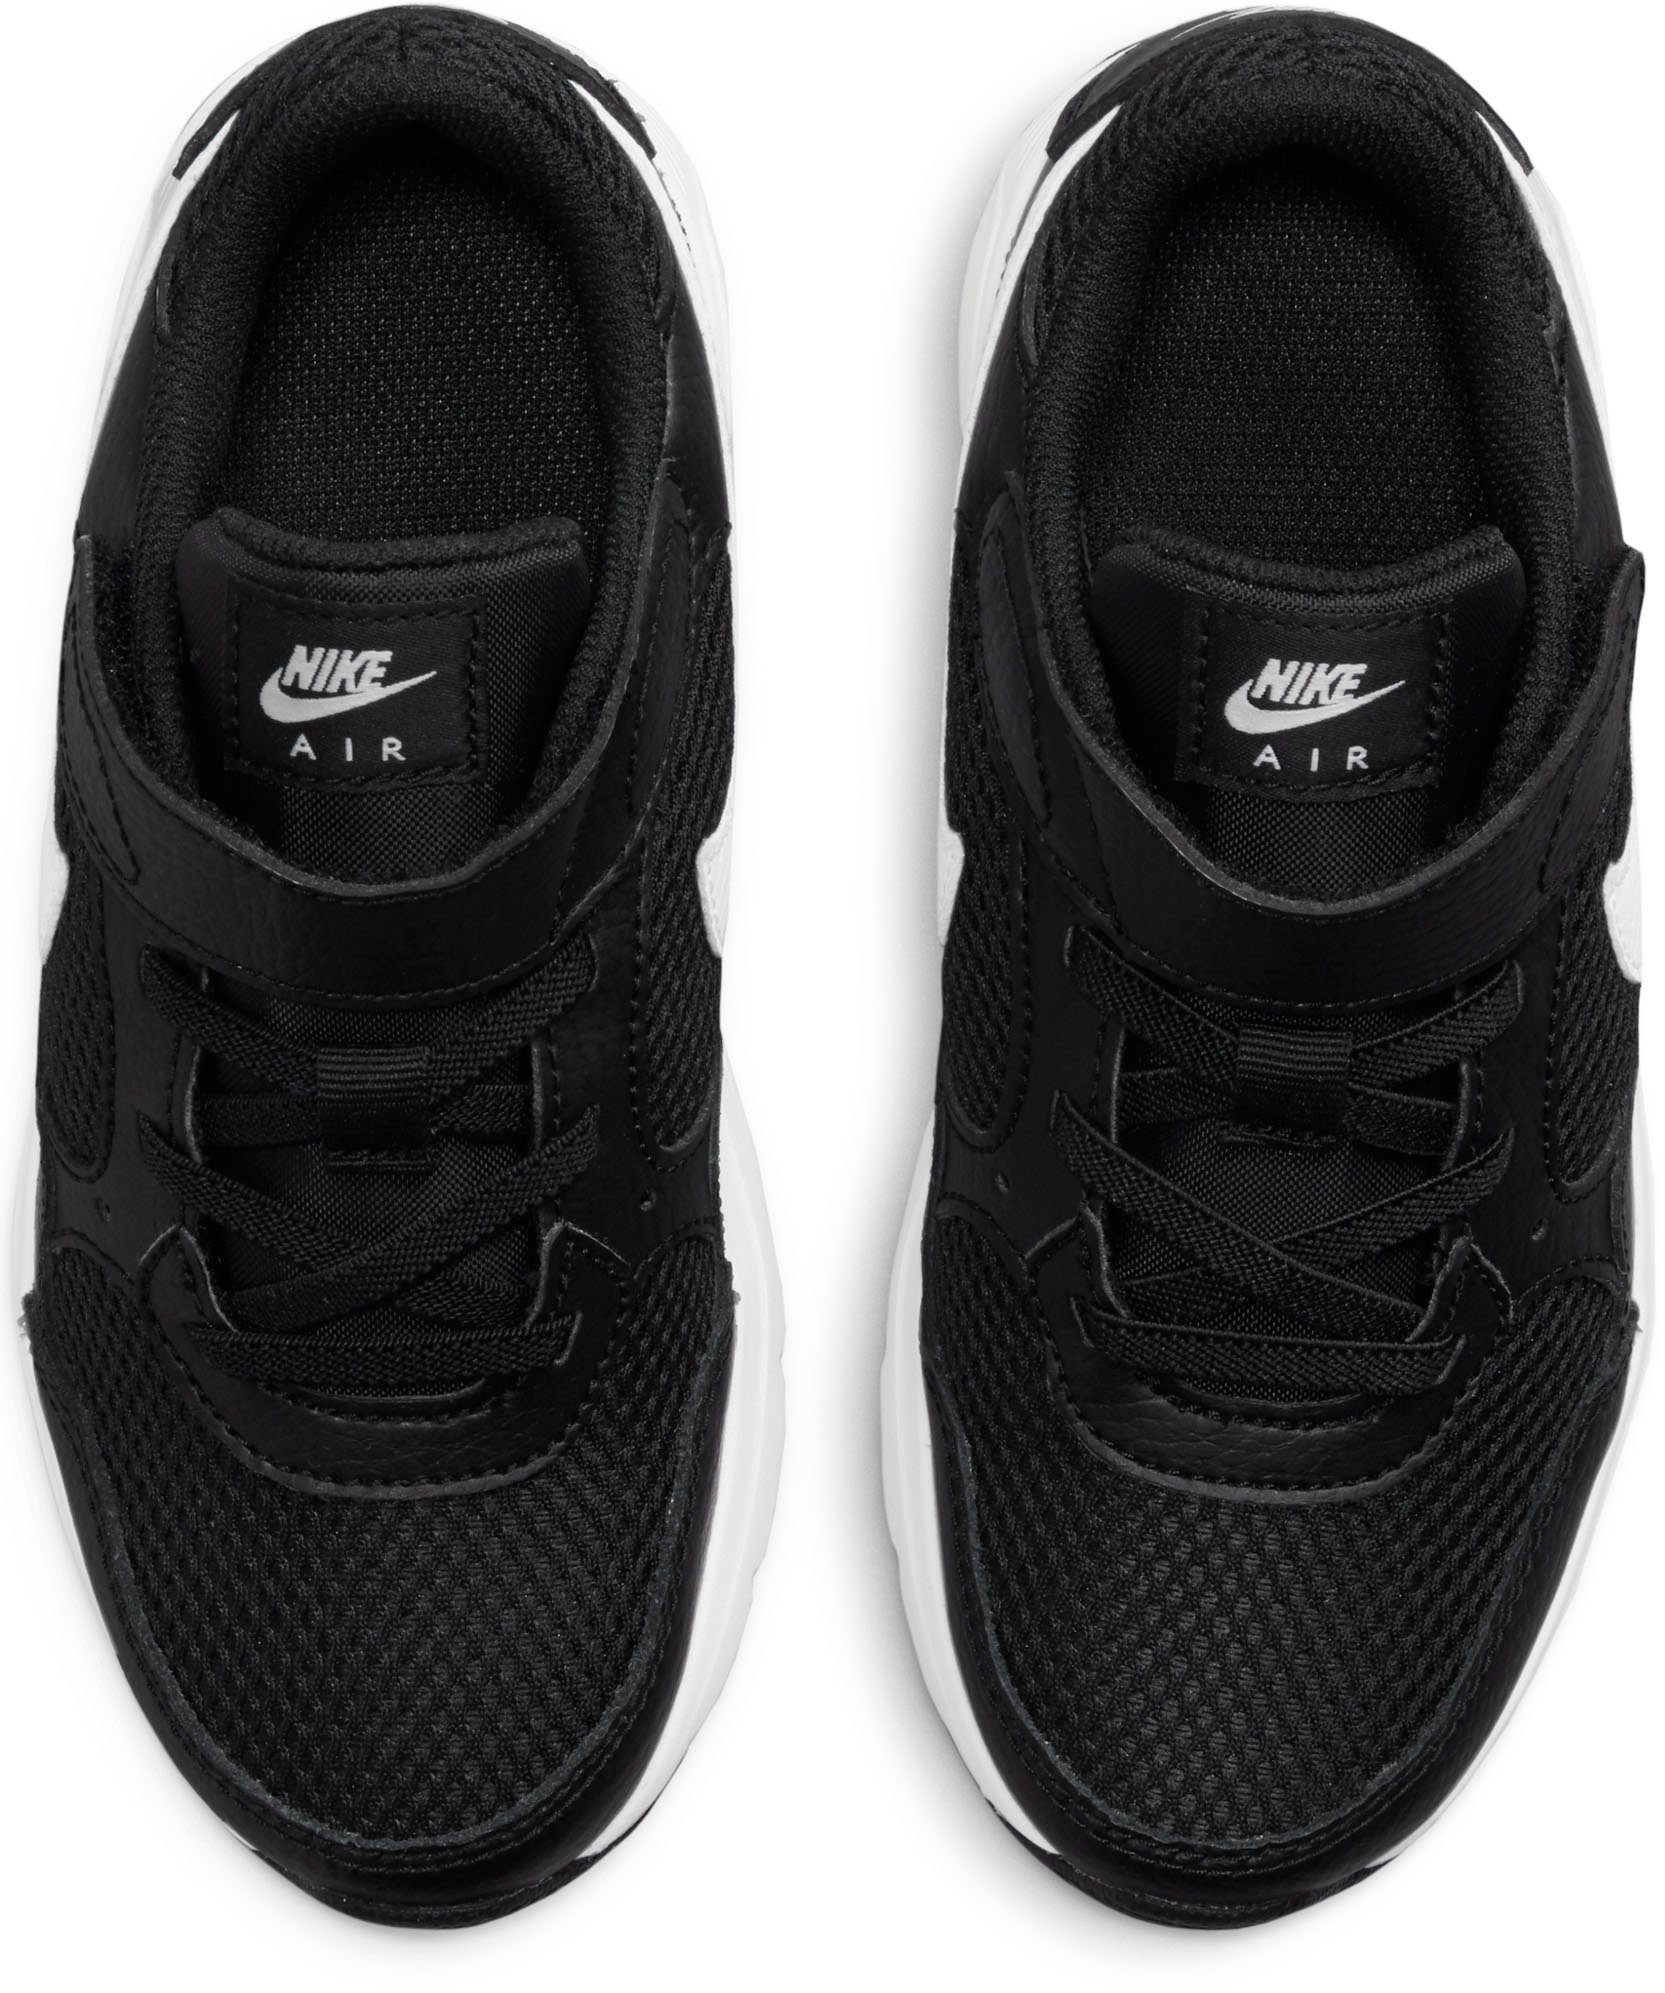 MAX AIR SC (PS) Sportswear schwarz-weiß Sneaker Nike